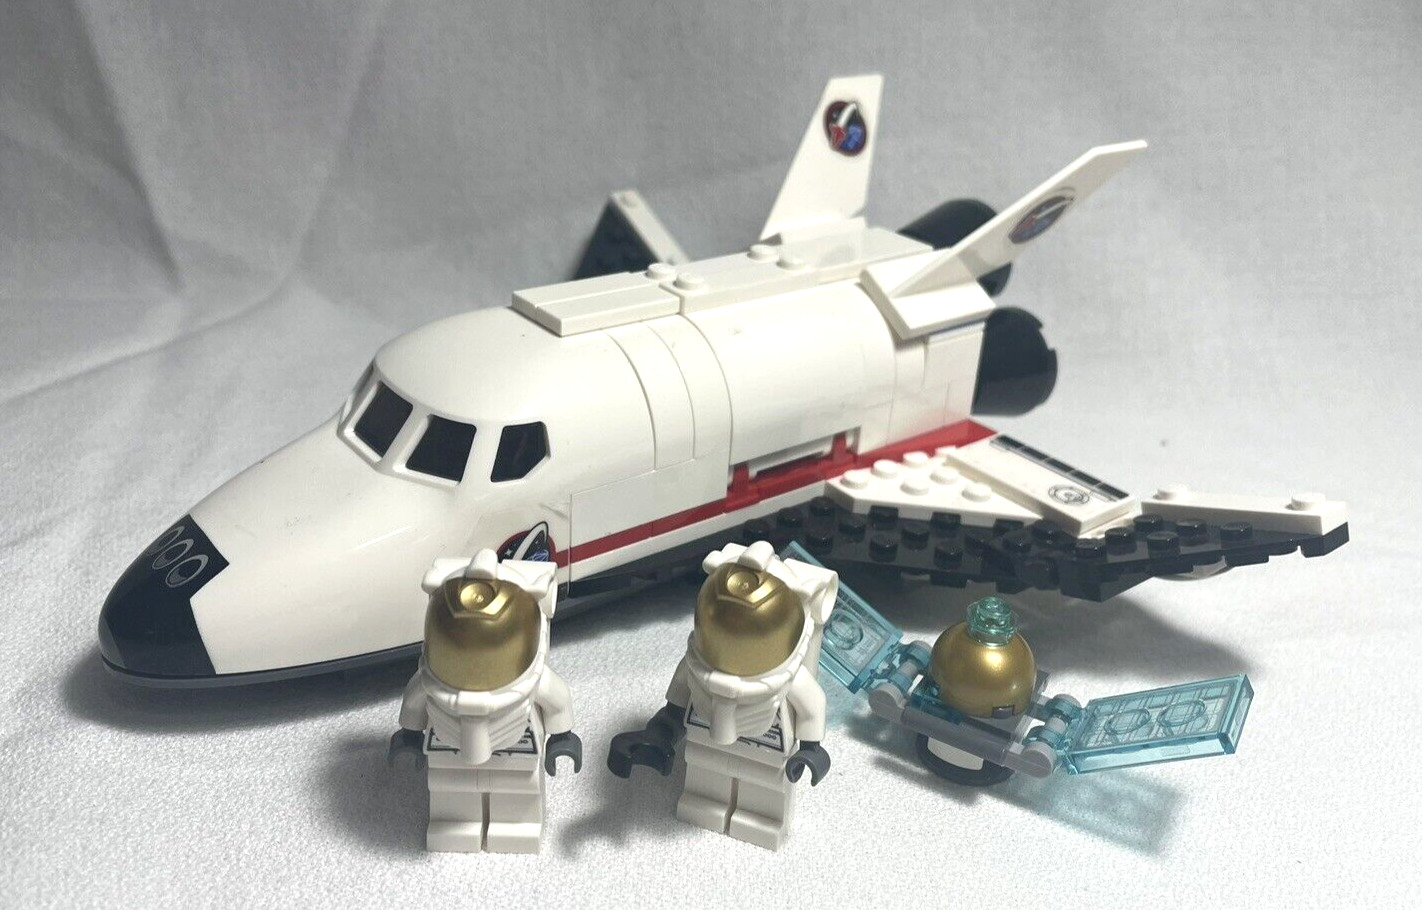 LEGO 60078 Utility Shuttle 100% w/Extra Items, no manual or box - 2015